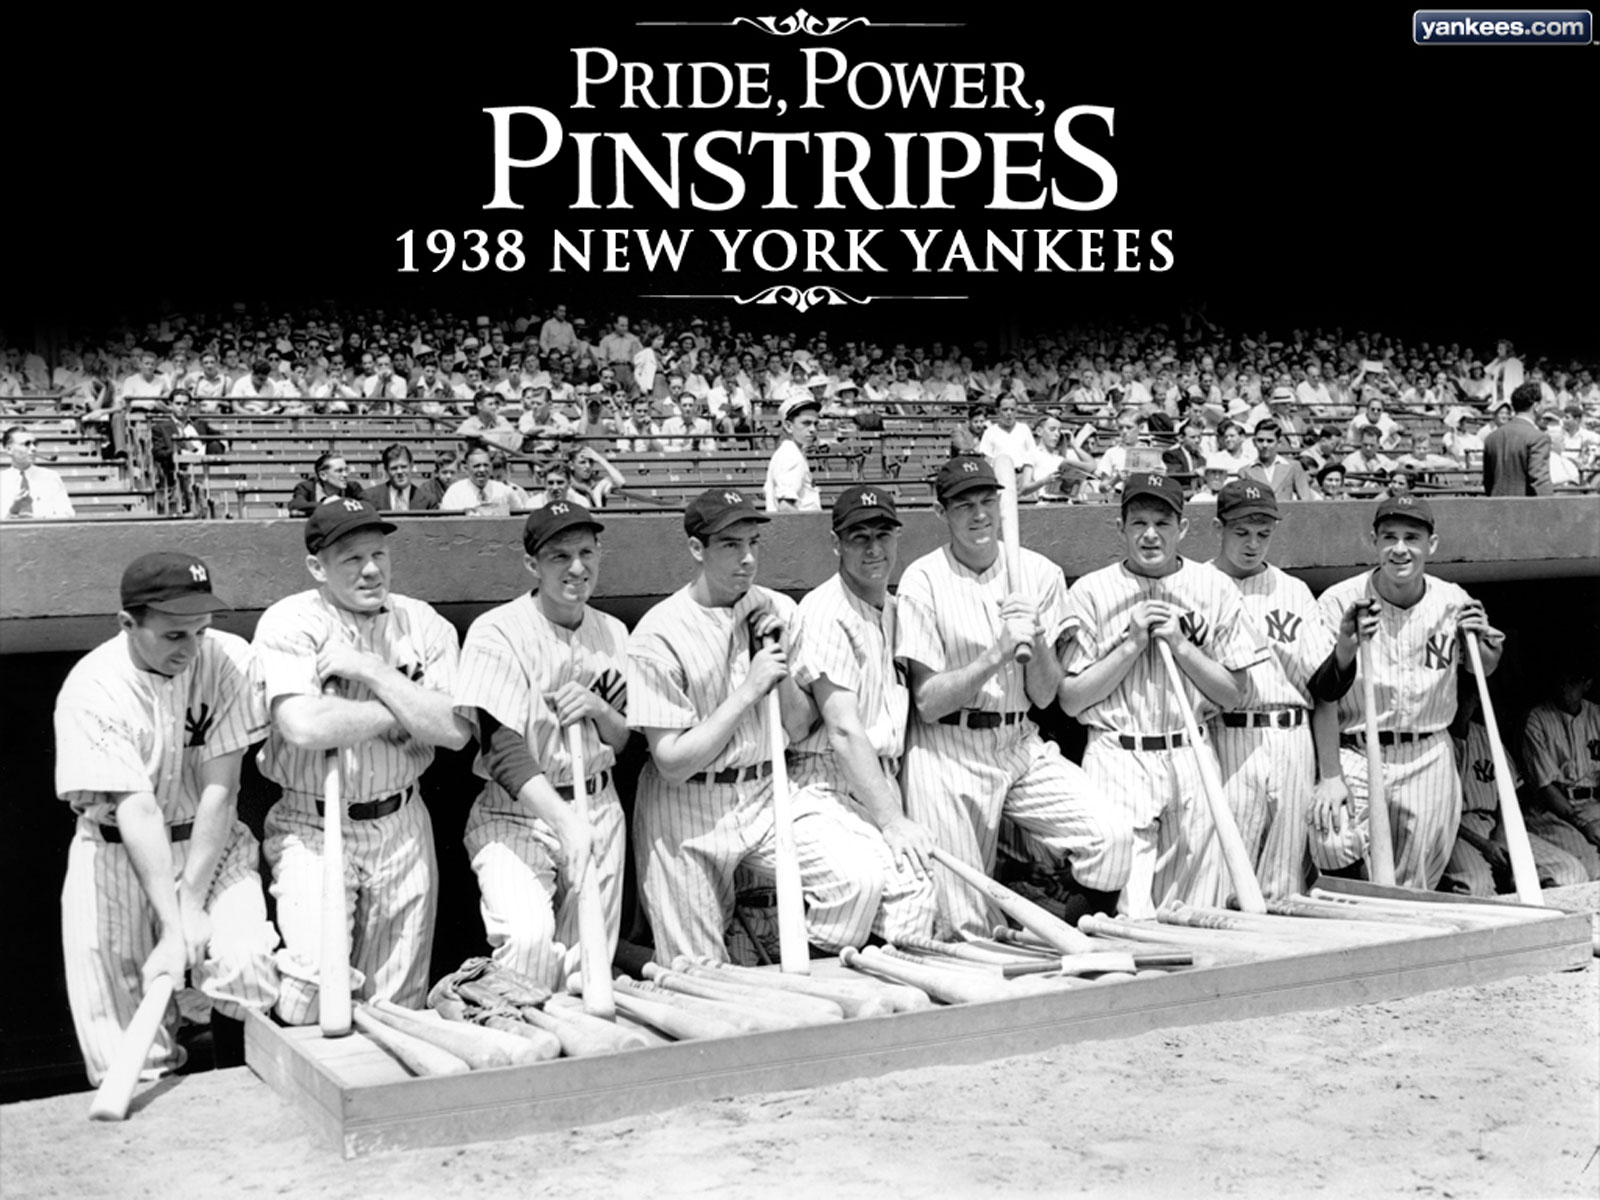 New New York Yankees background New York Yankees wallpapers